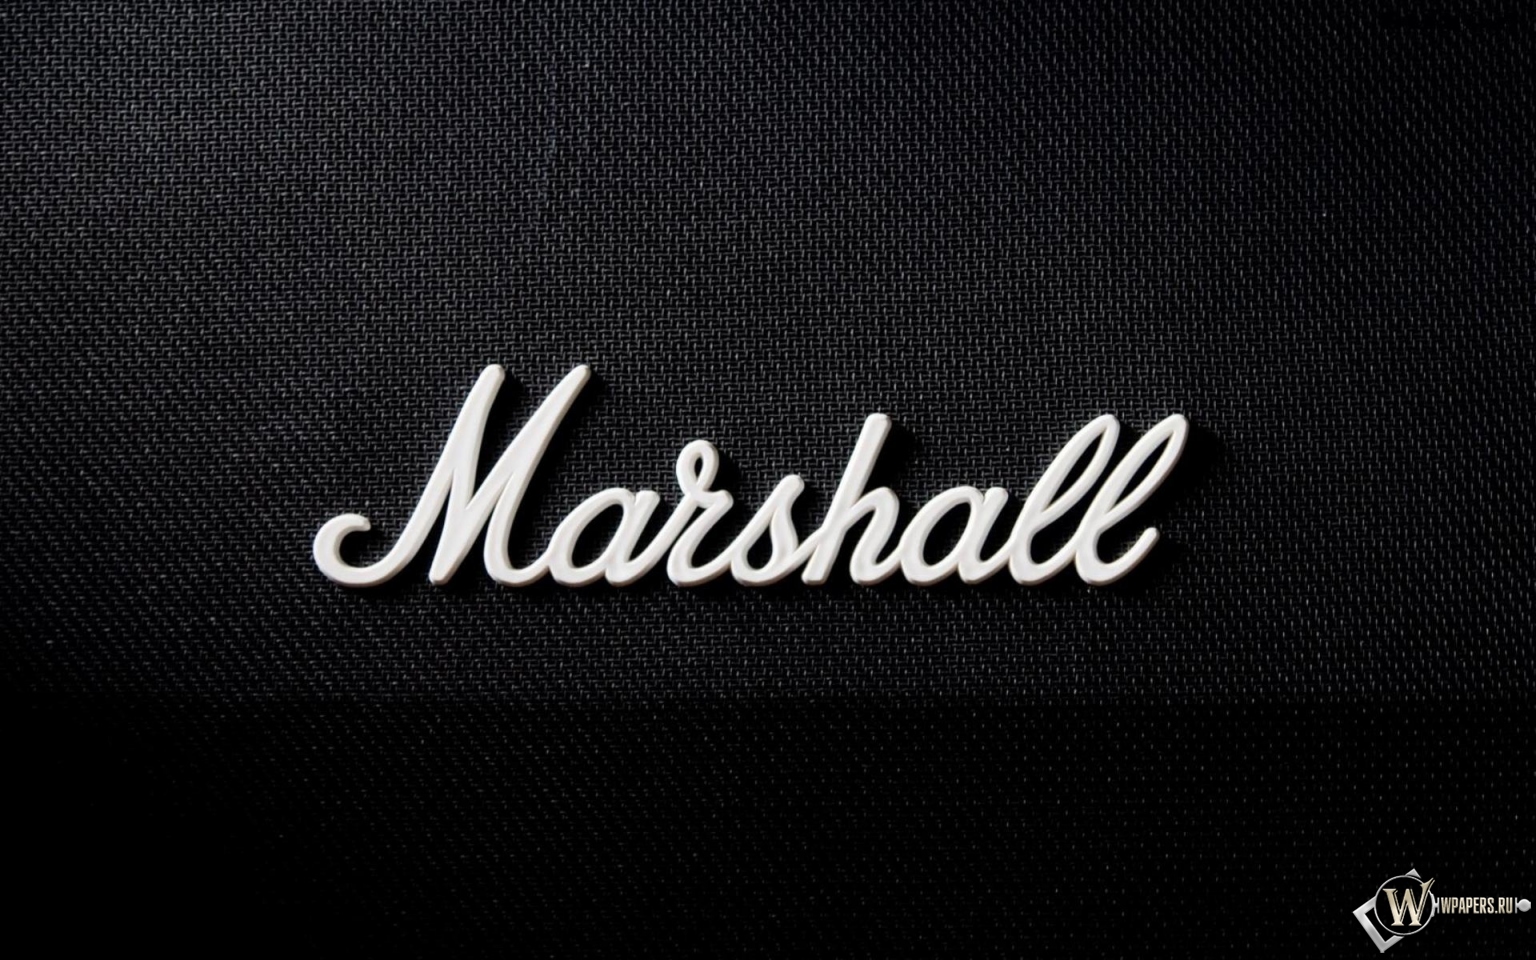 Marshall 1536x960